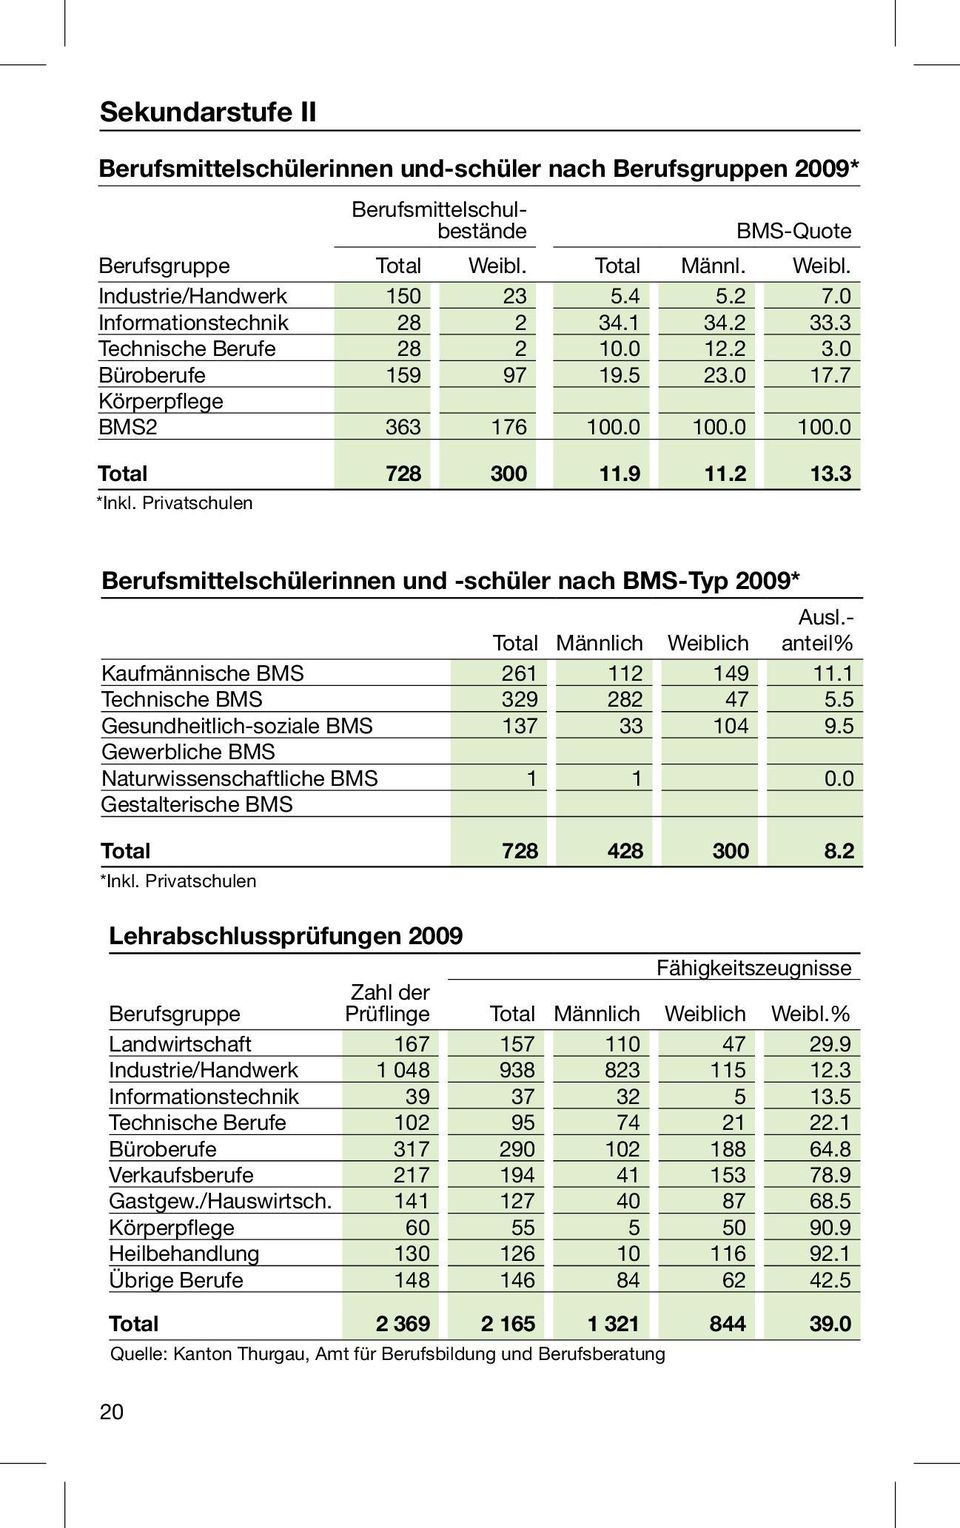 Privatschulen Berufsmittelschülerinnen und -schüler nach BMS-Typ 2009* Ausl.- Total Männlich Weiblich anteil% Kaufmännische BMS 61 11 149 11.1 Technische BMS 39 8 47 5.